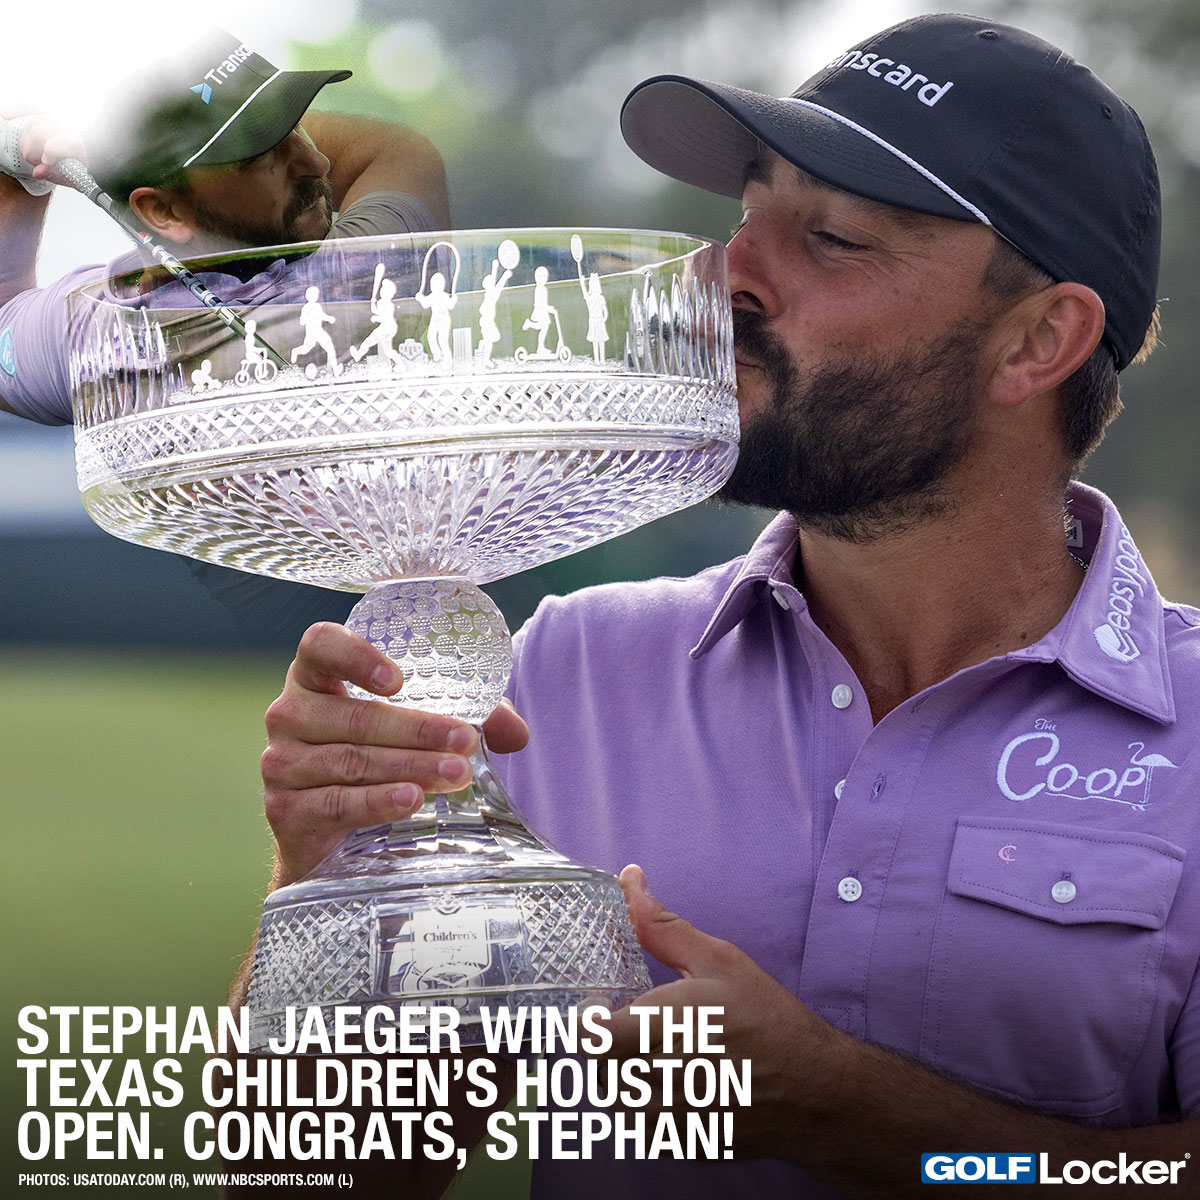 Stephan Jaeger Wins The Texas Childrens Houston Open. Congrats, Stephan!